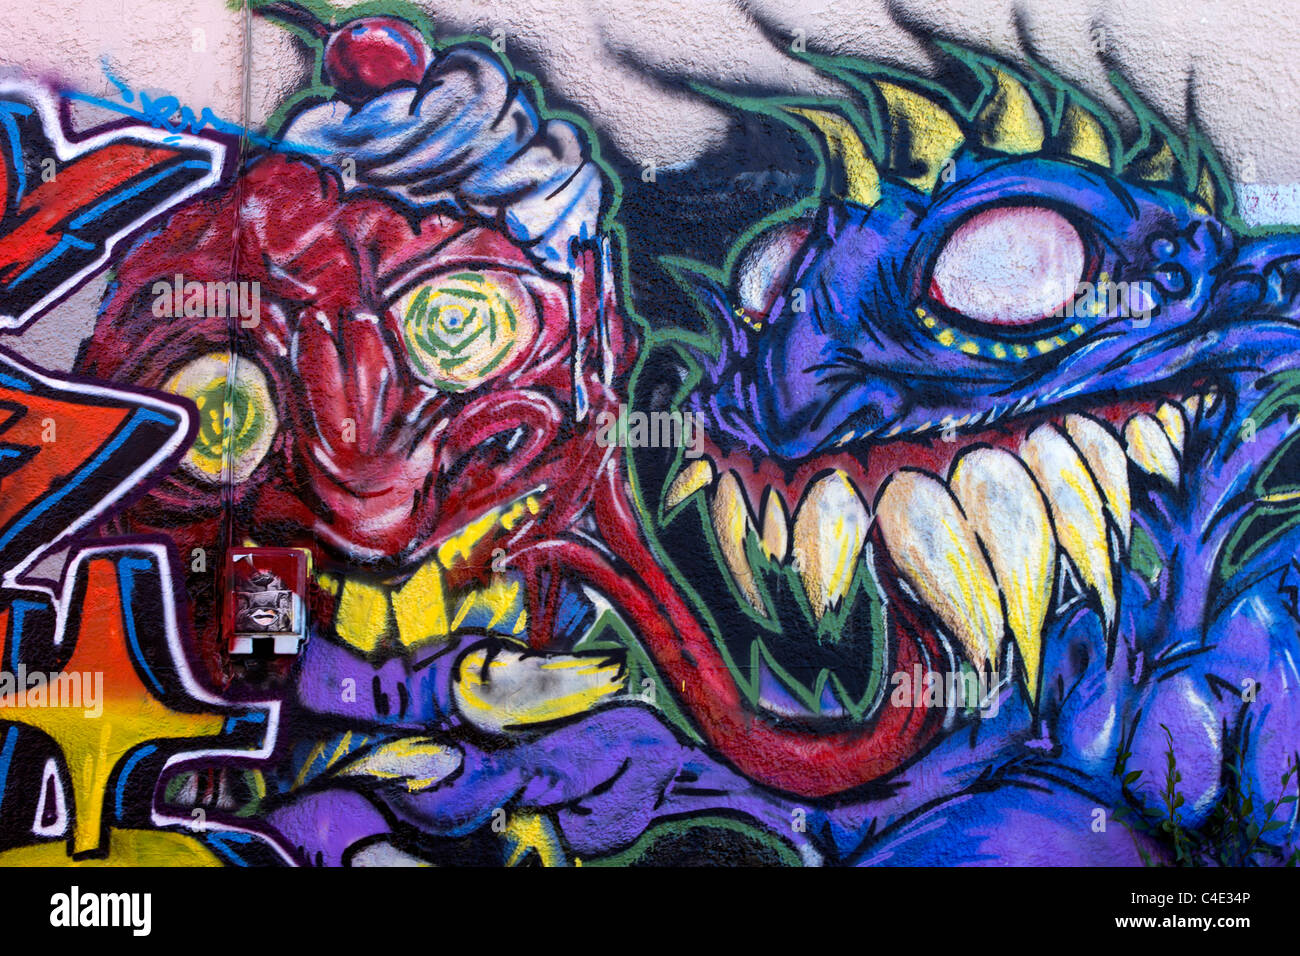 Purple and Red Graffiti Monster Stock Photo - Alamy